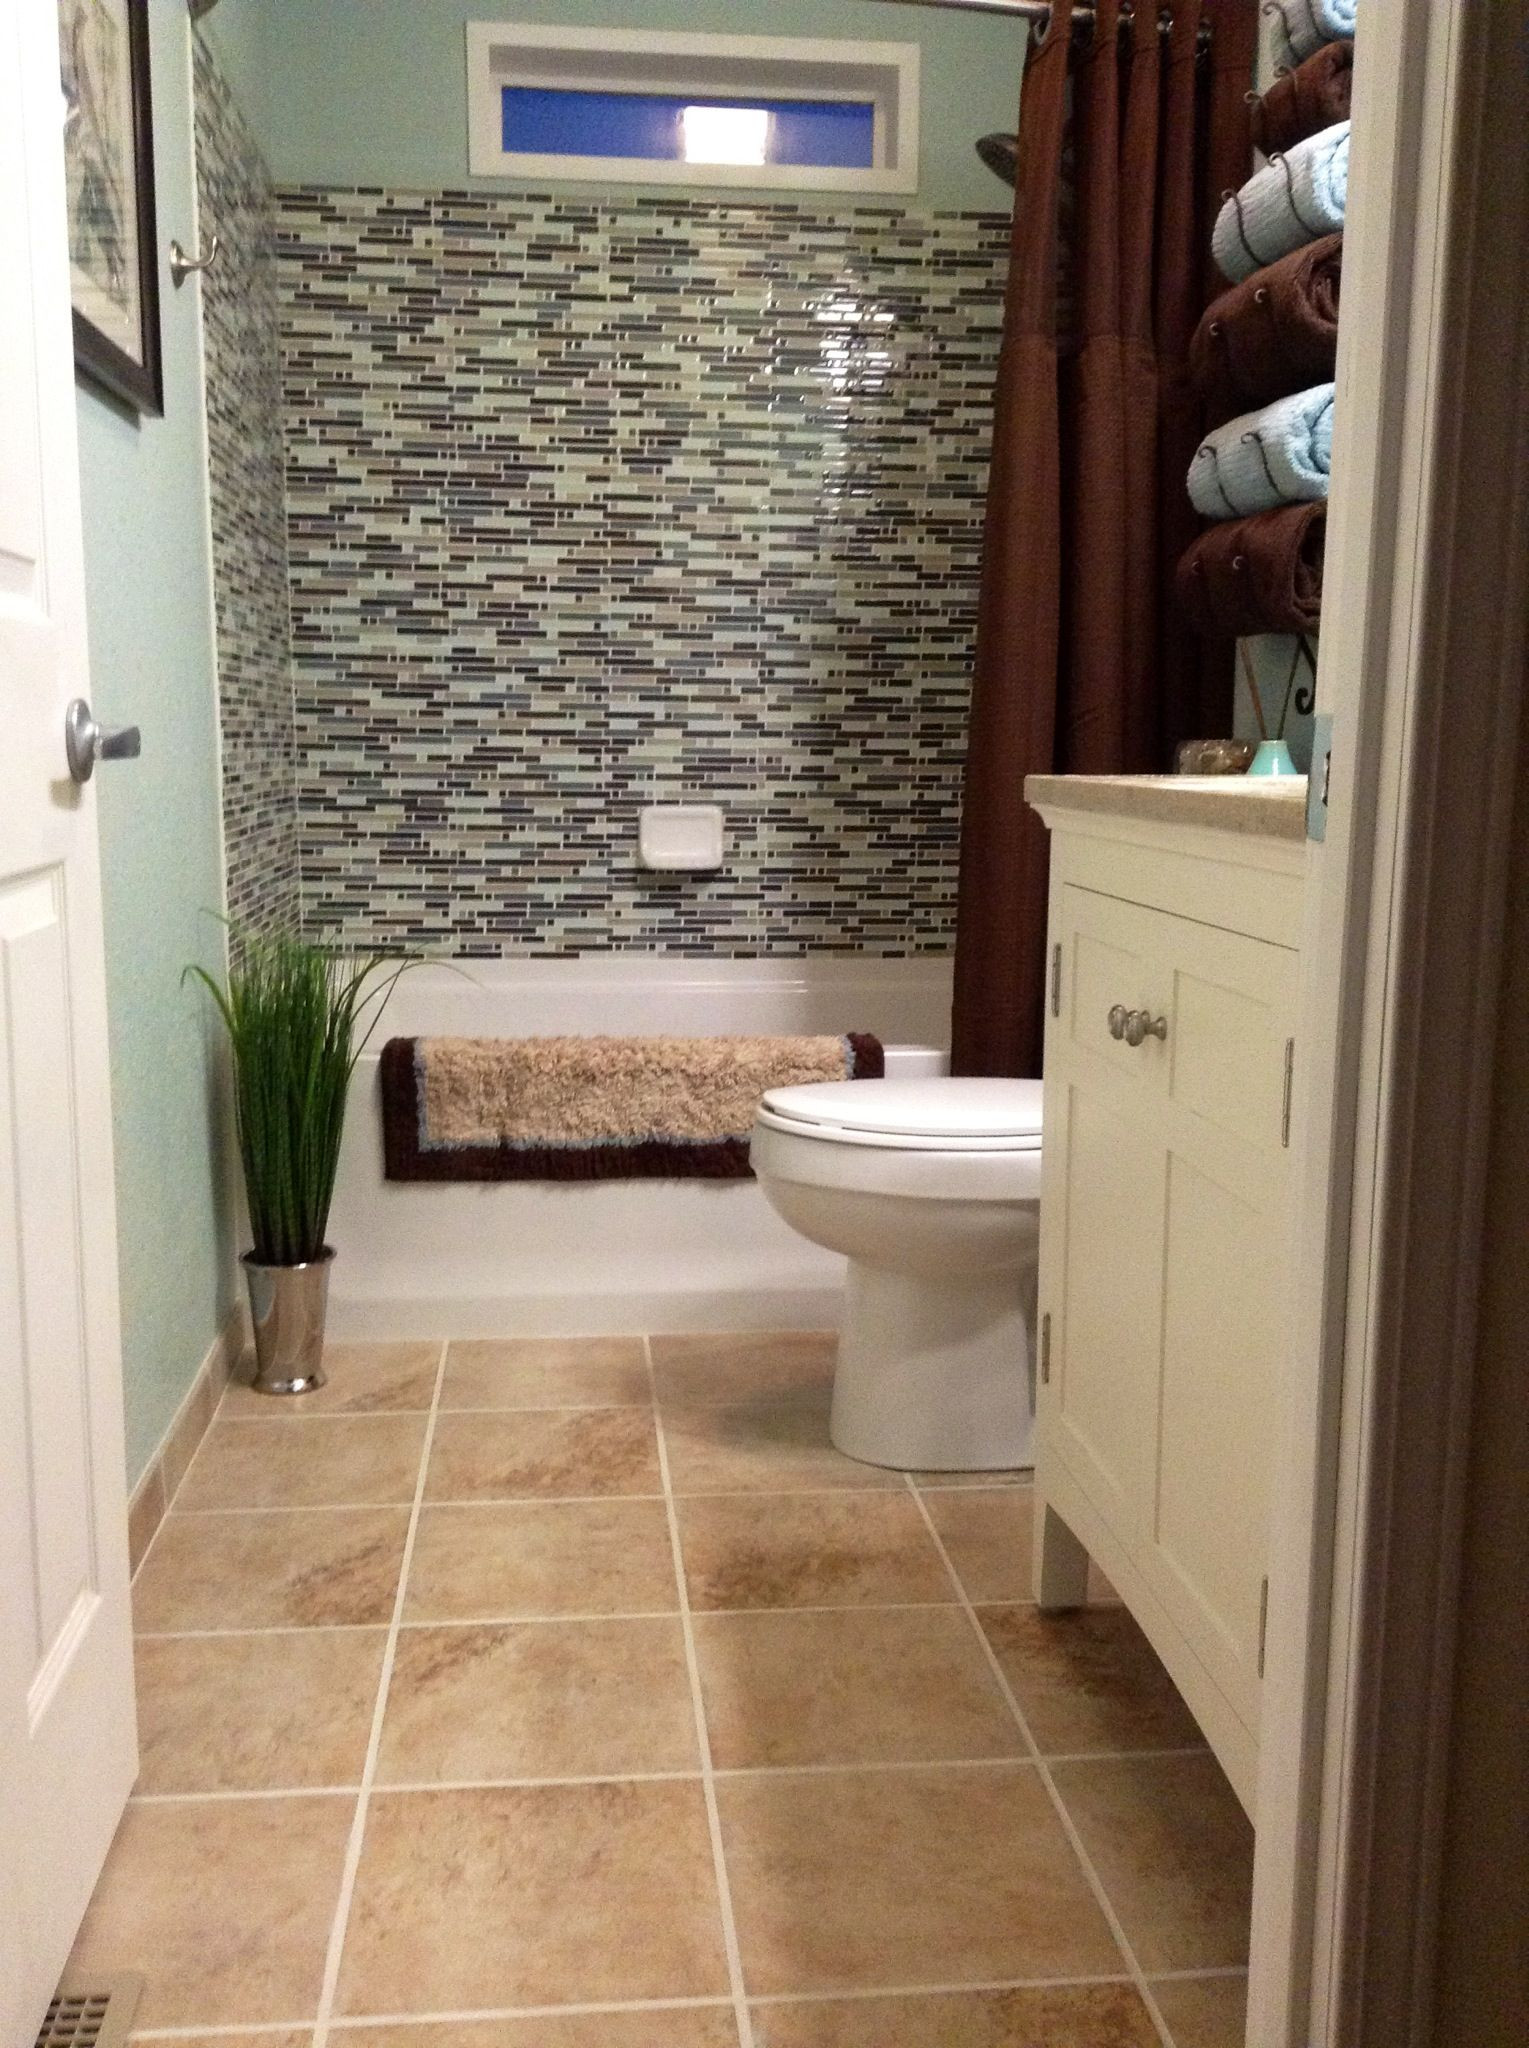 Pinterest Bathroom Tile
 For my bathroom nice floor tile and shower tile